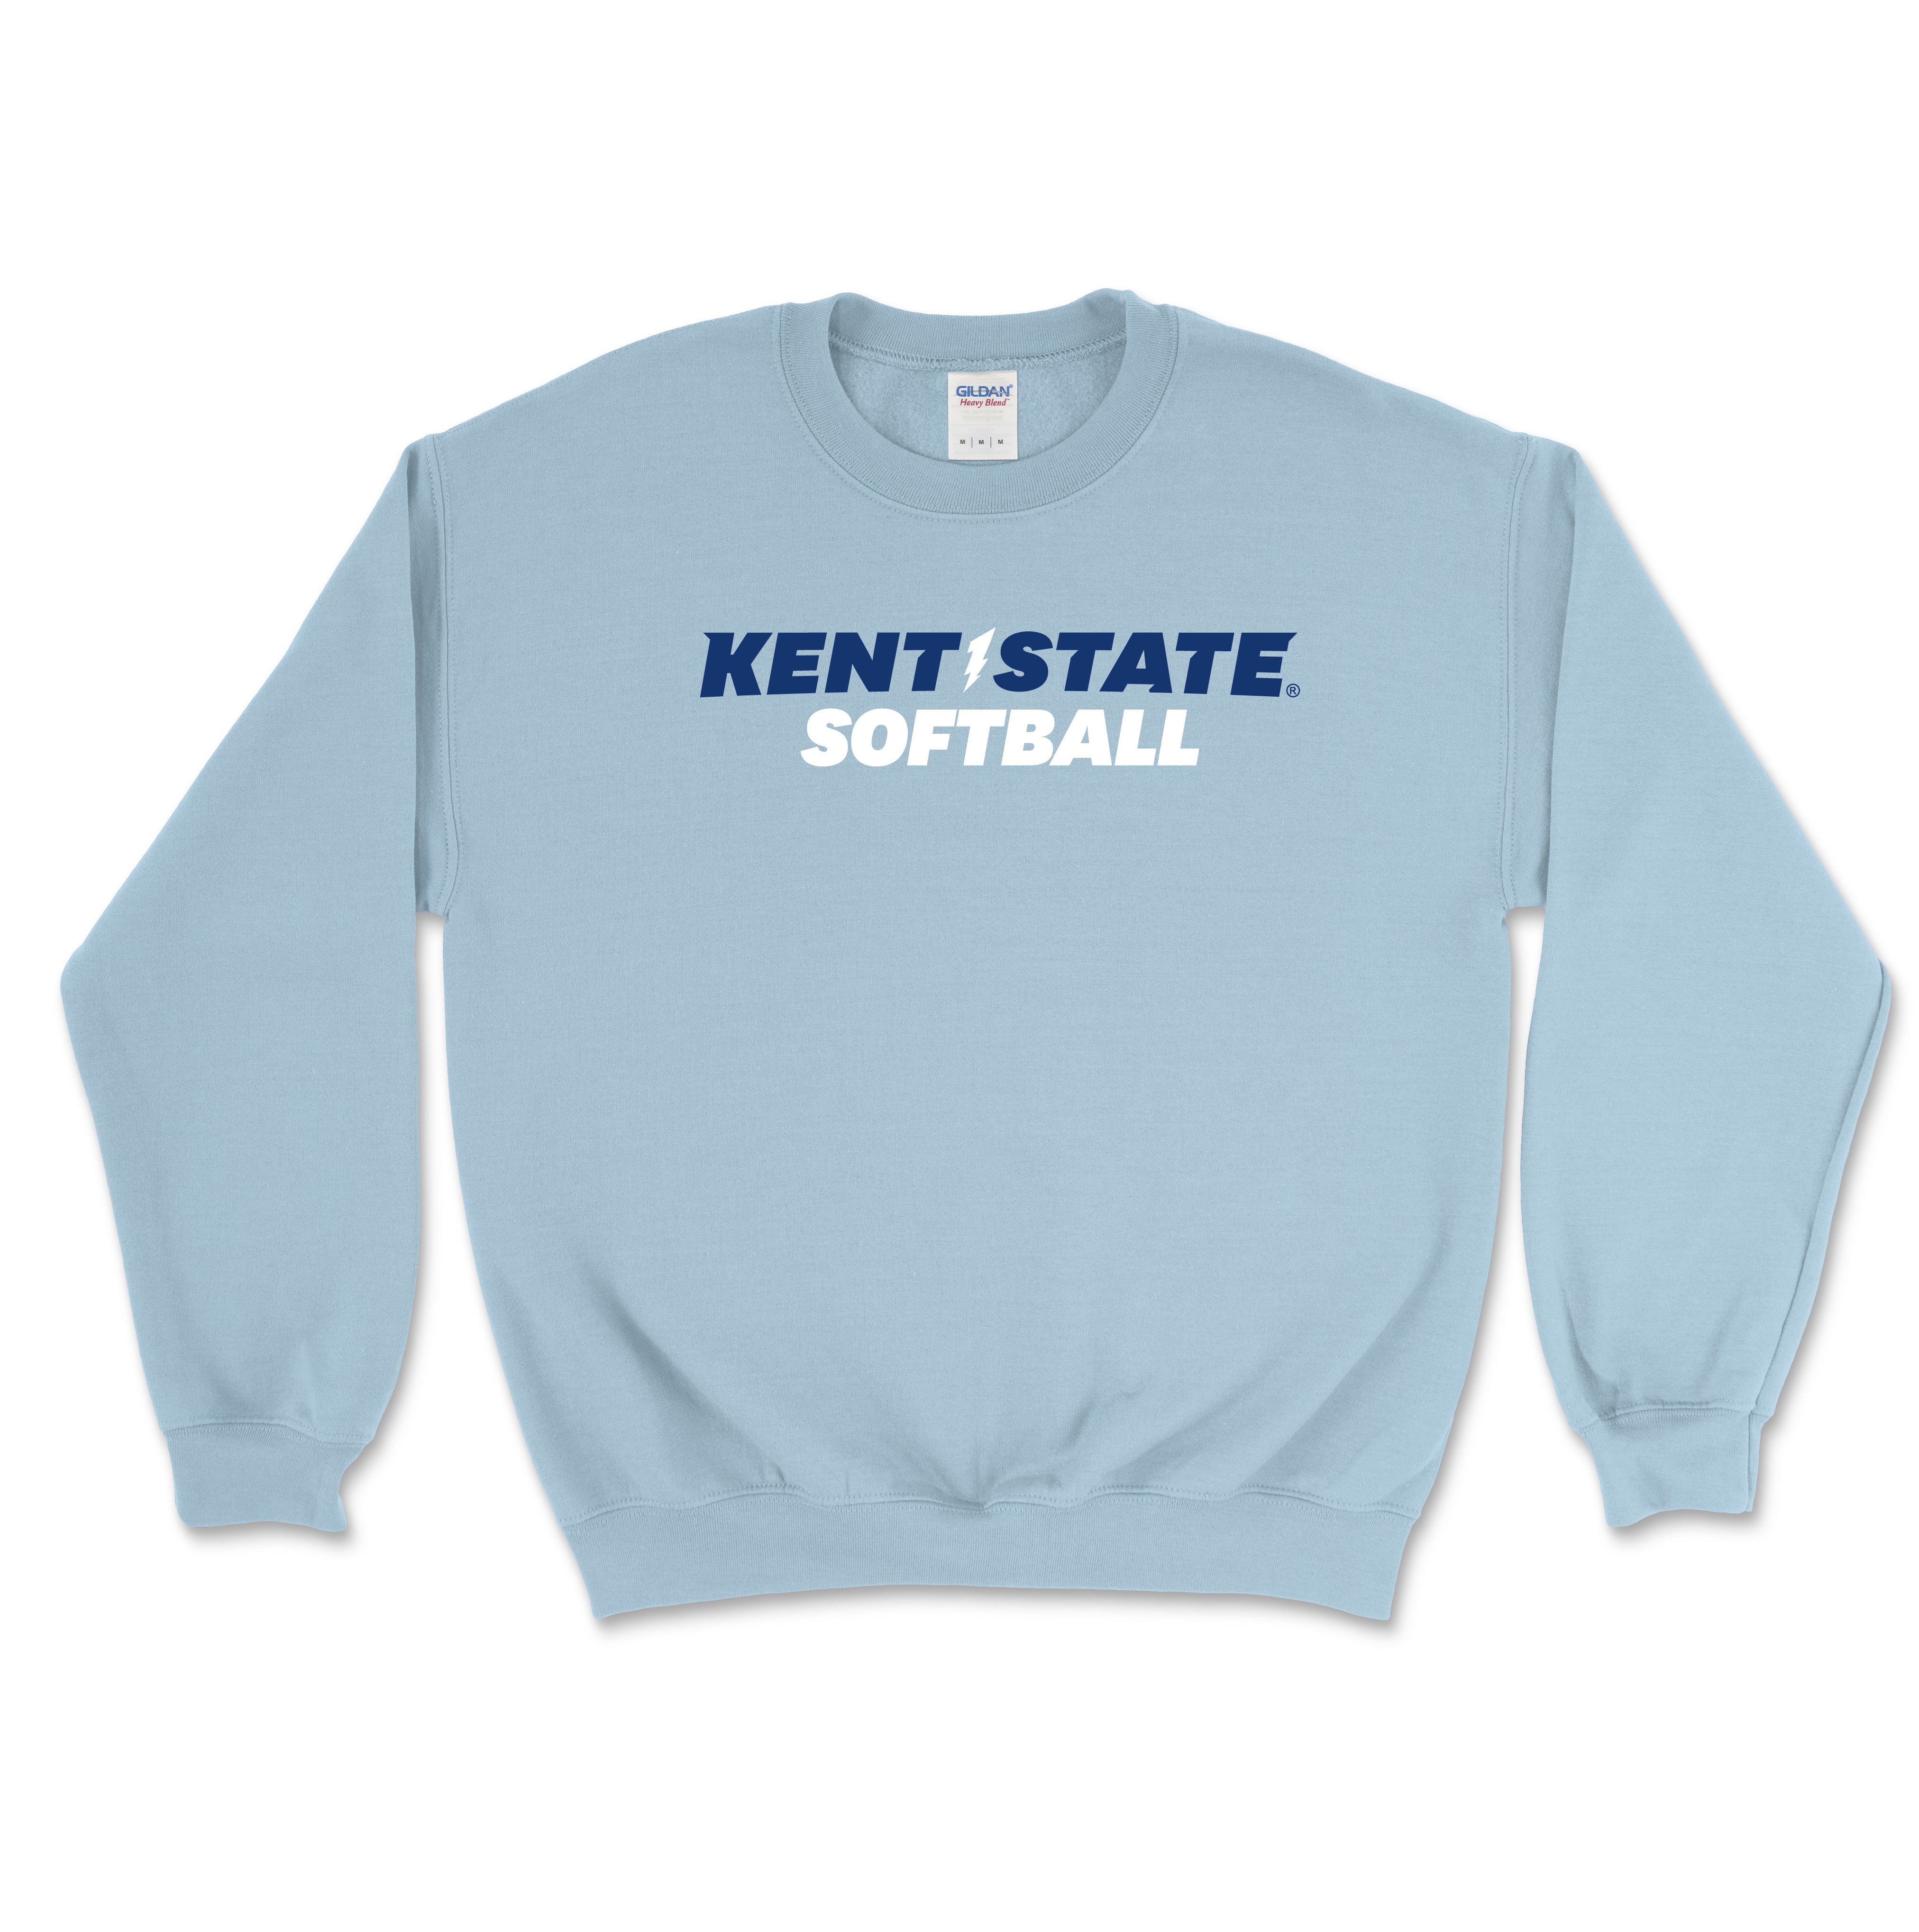 Kent State Light Blue Softball Crewneck Sweatshirt